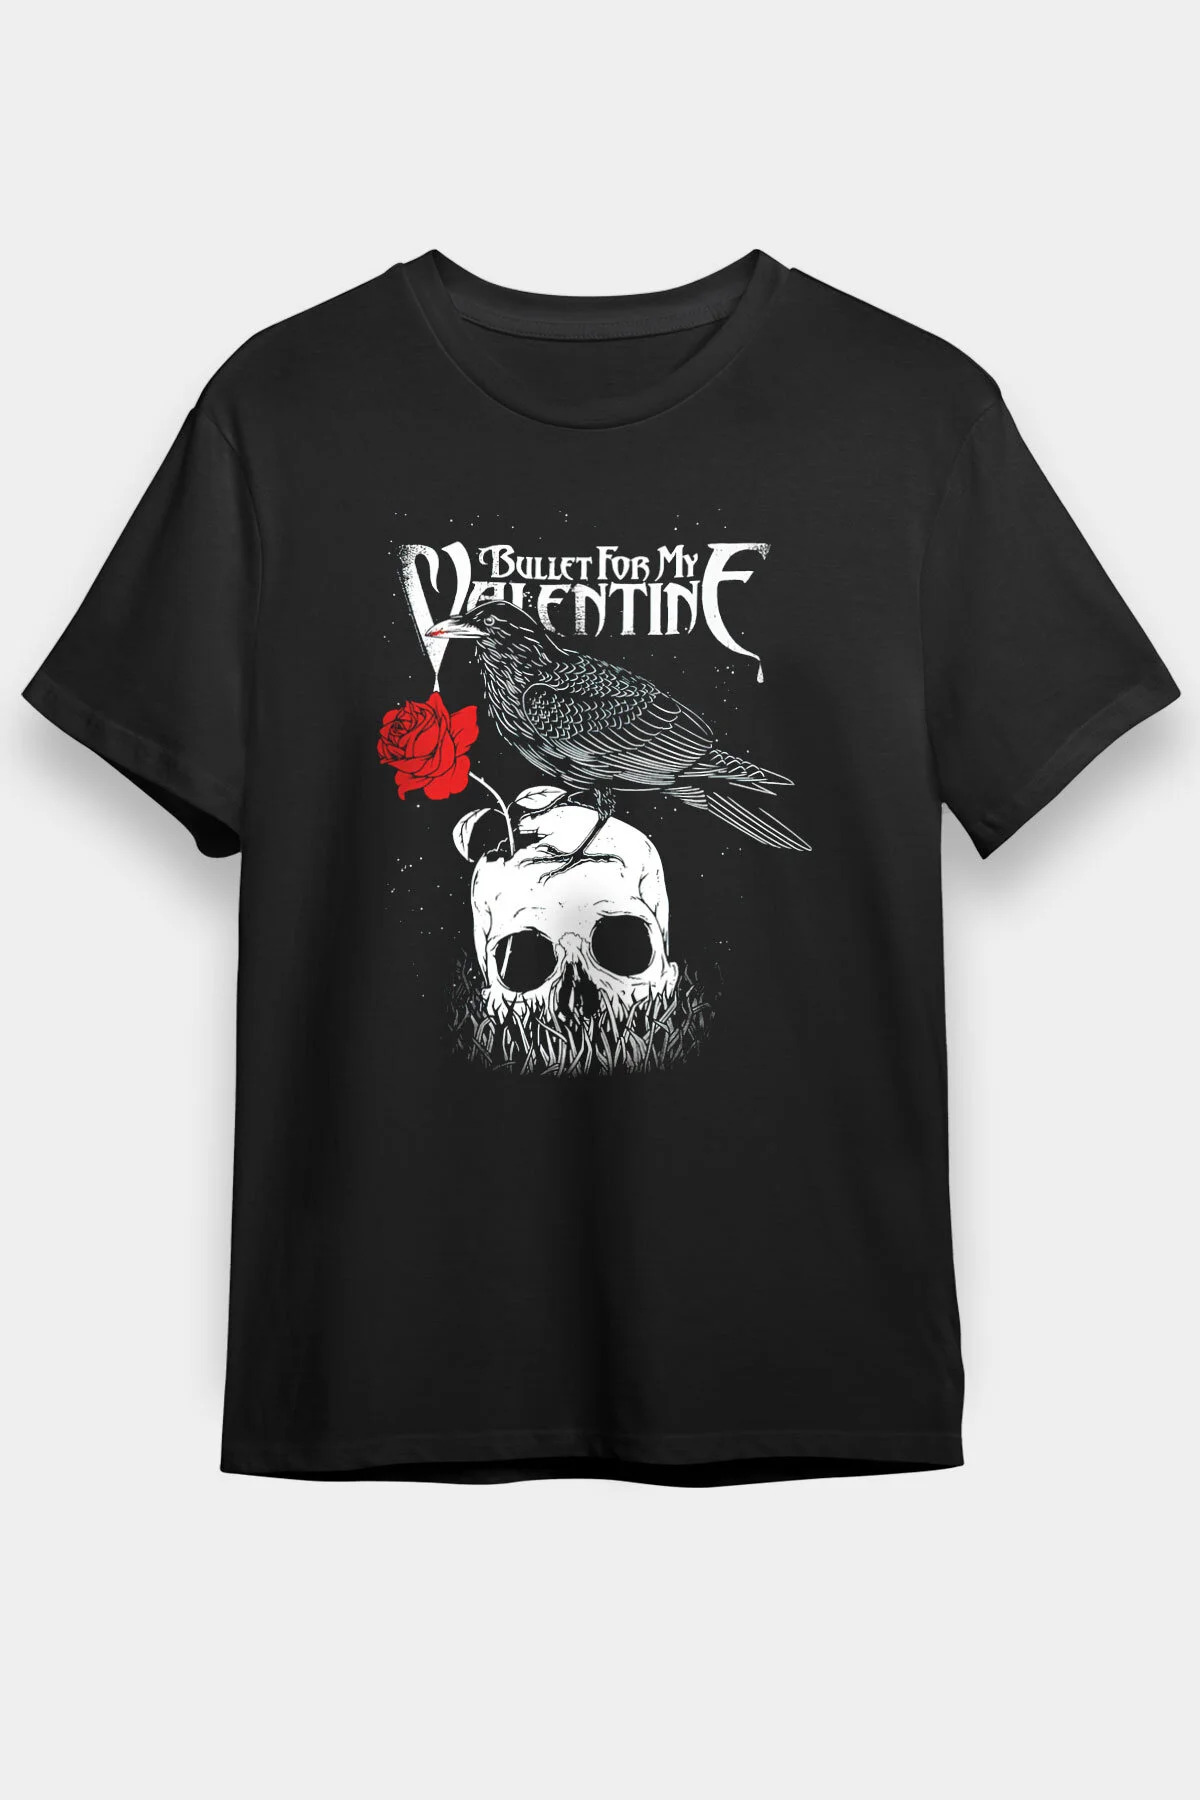 Bullet for My Valentine ,Rock Music Band ,Unisex Tshirt 35